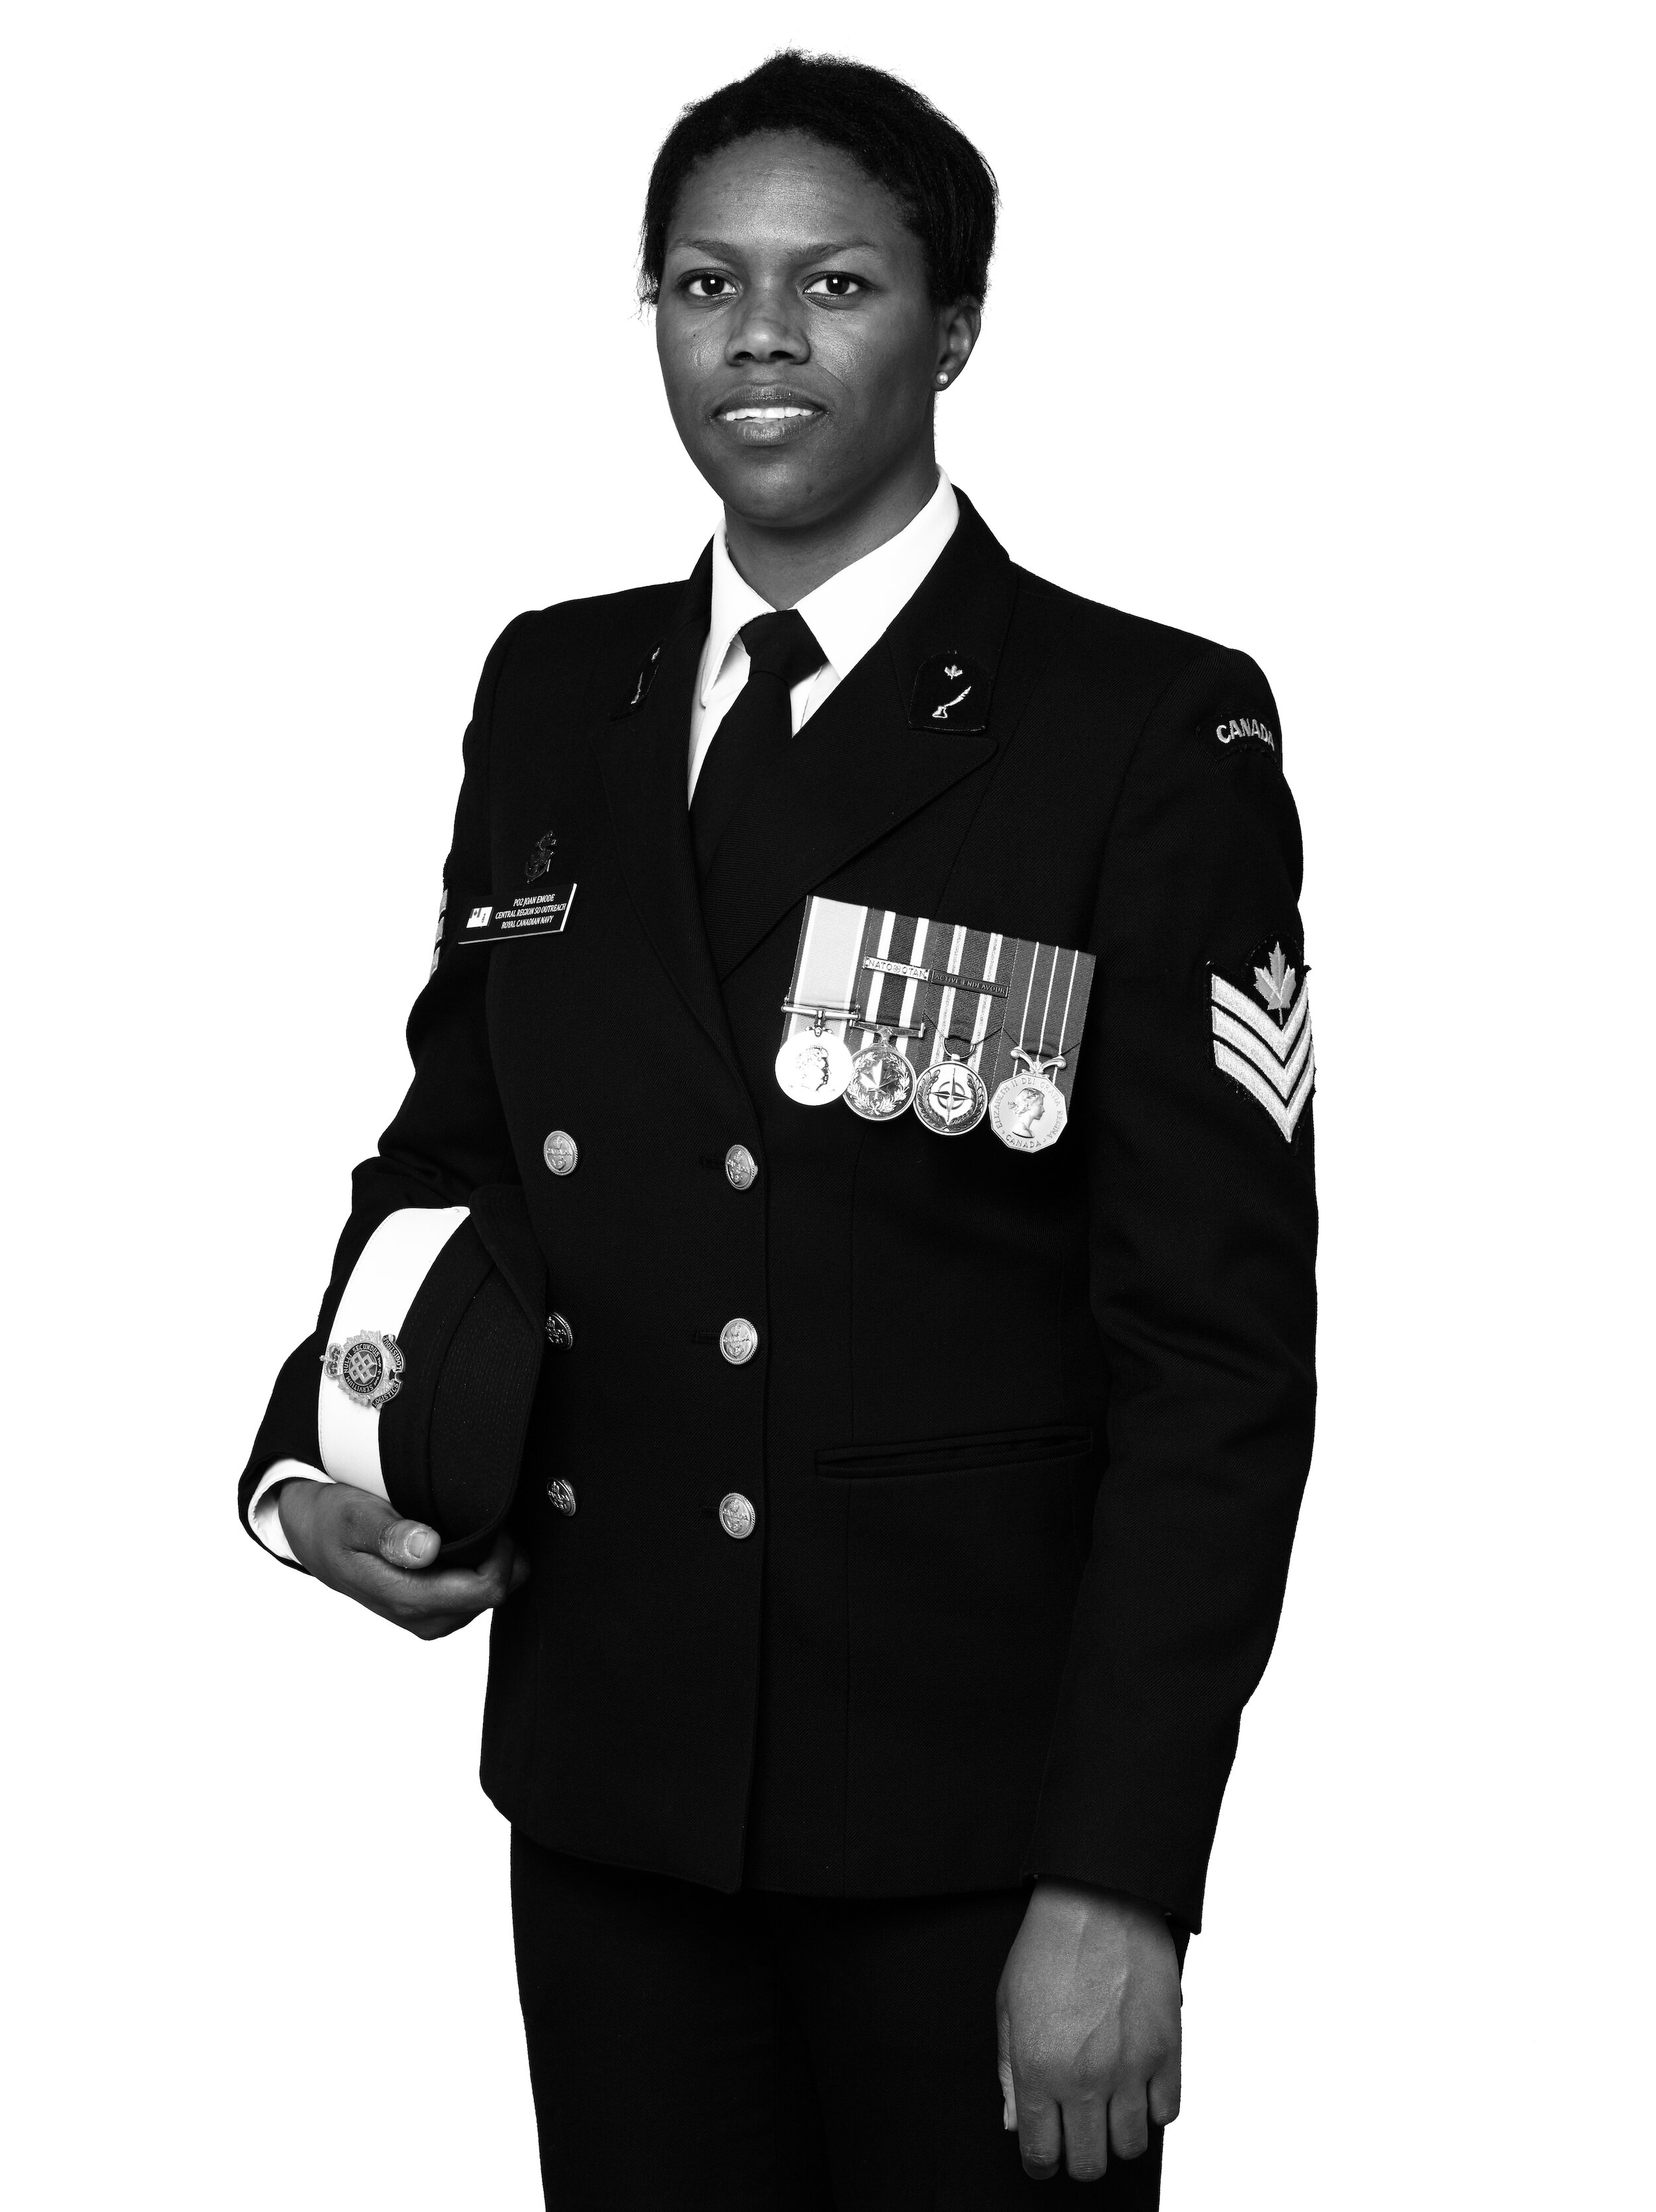 Petty Officer 2nd Class Joan Emode